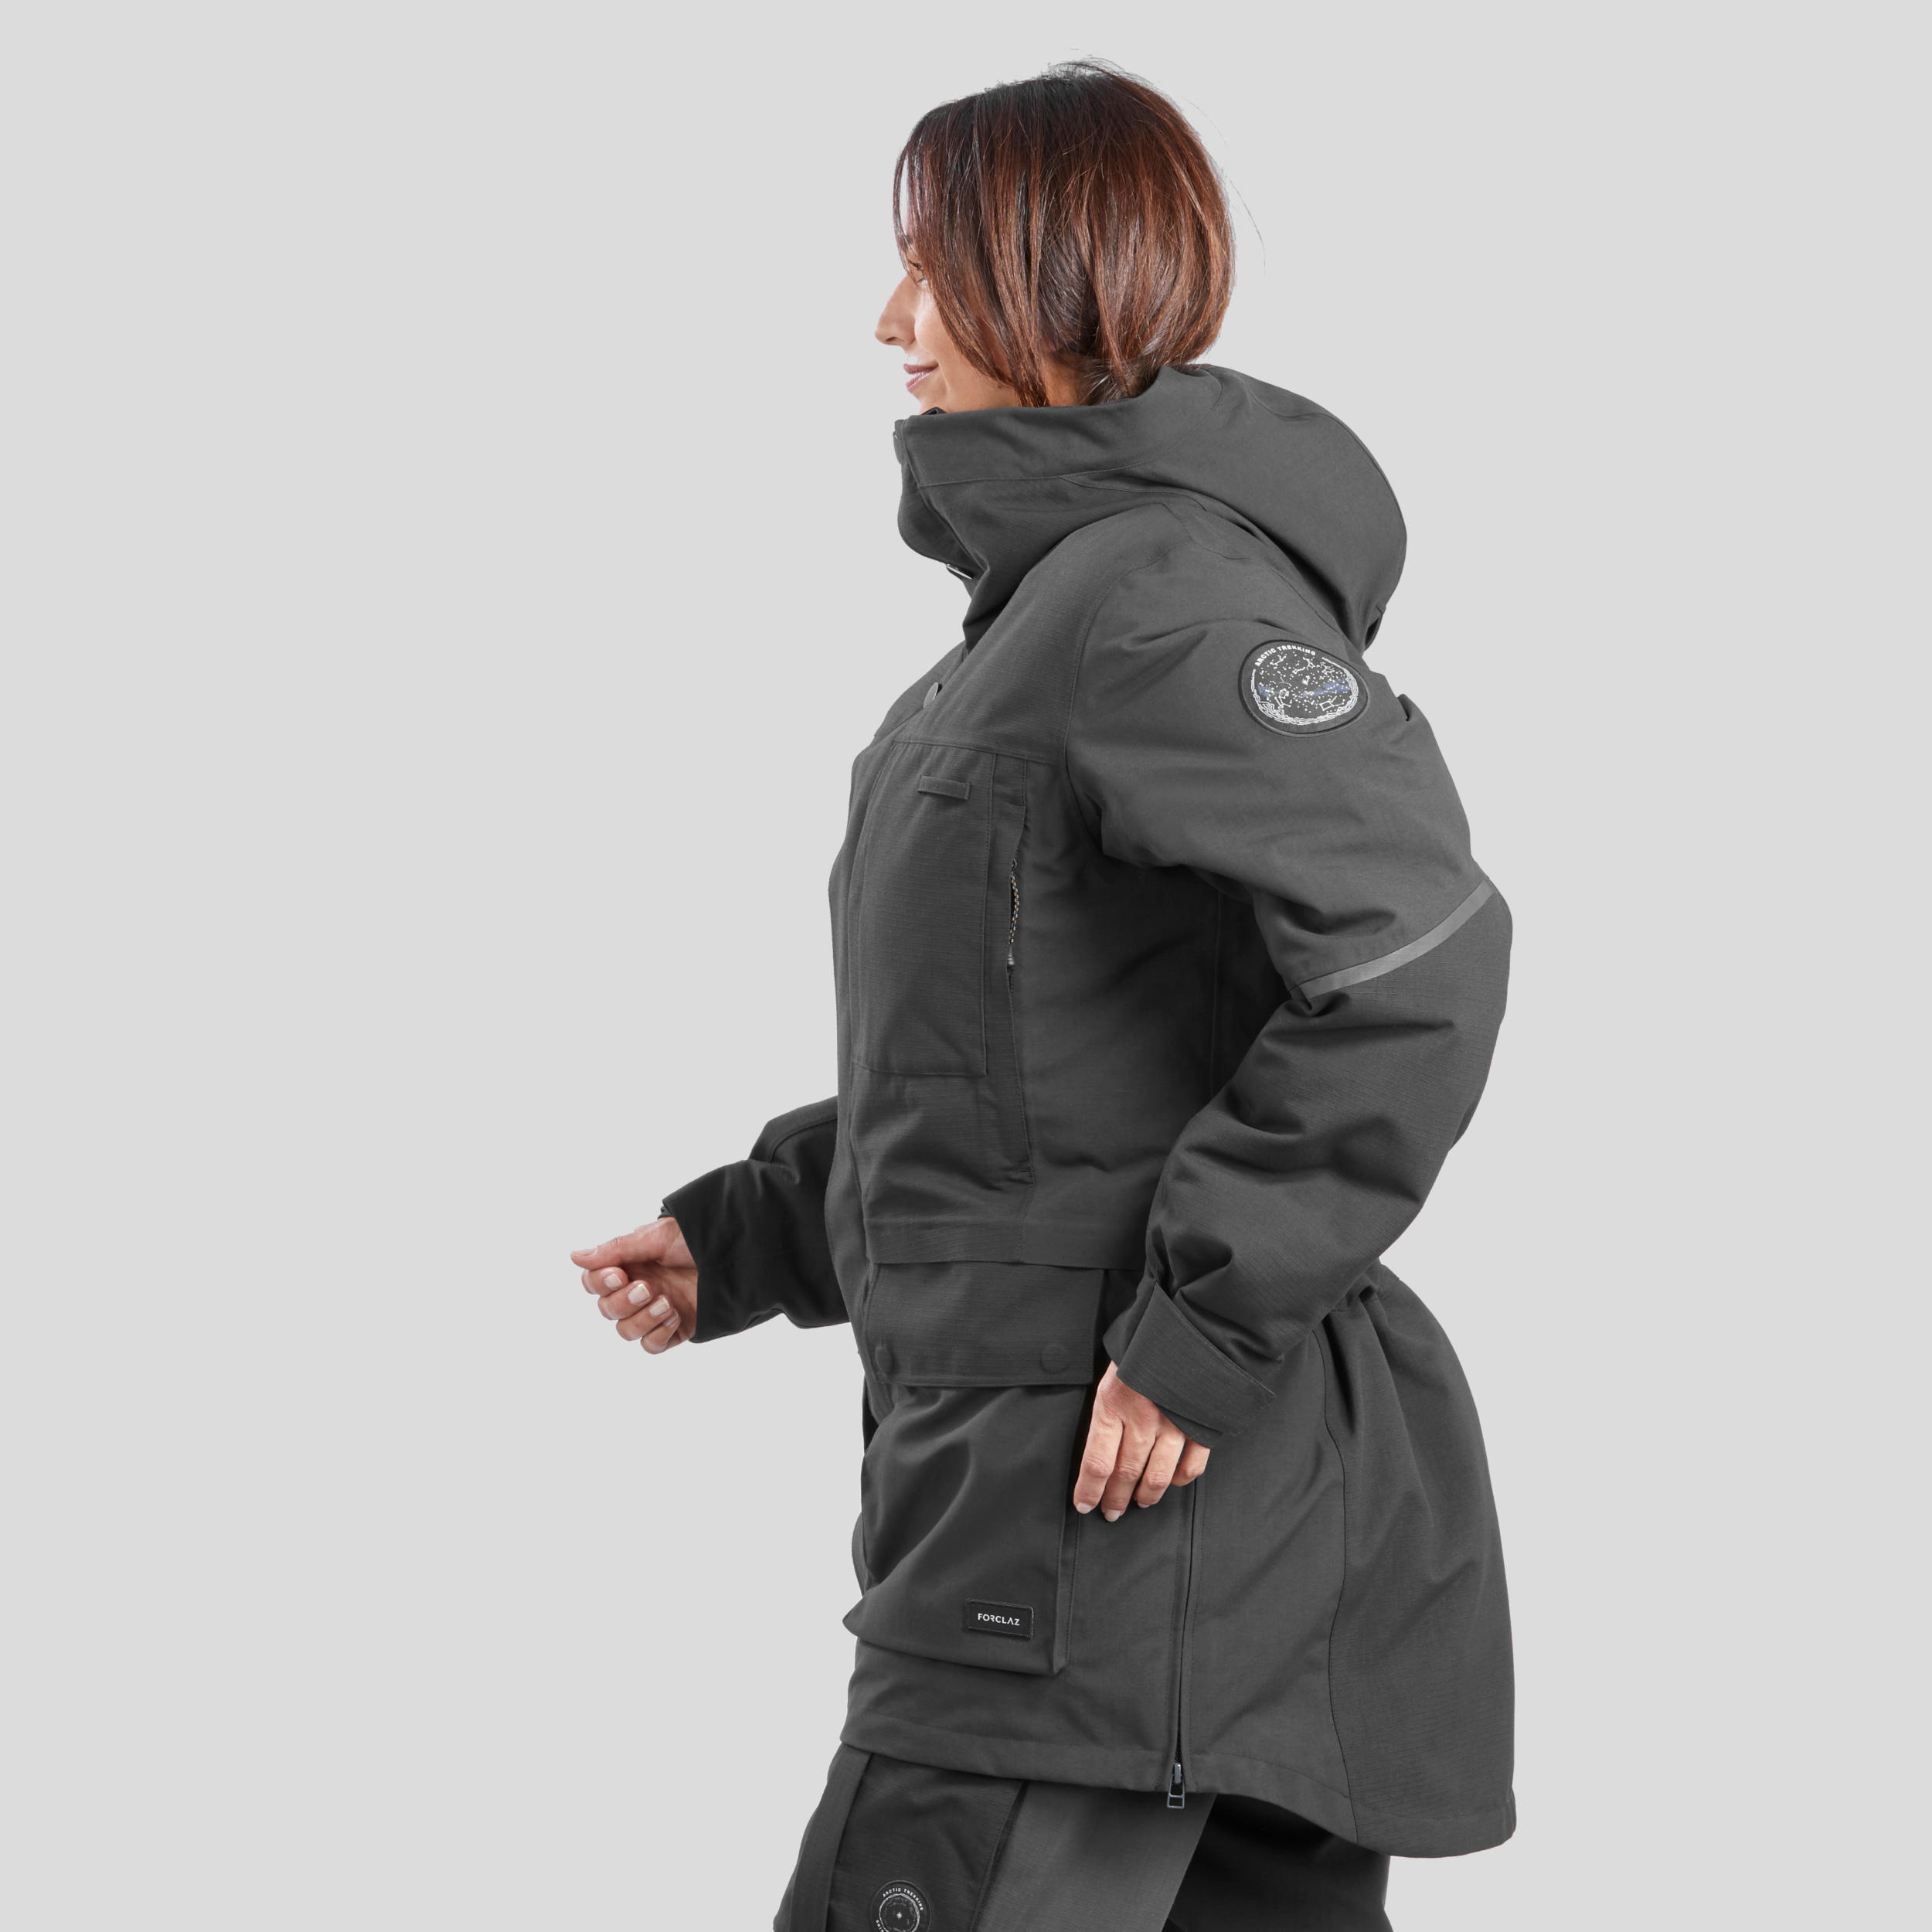 Unisex waterproof parka jacket - 900 - Black 20/21